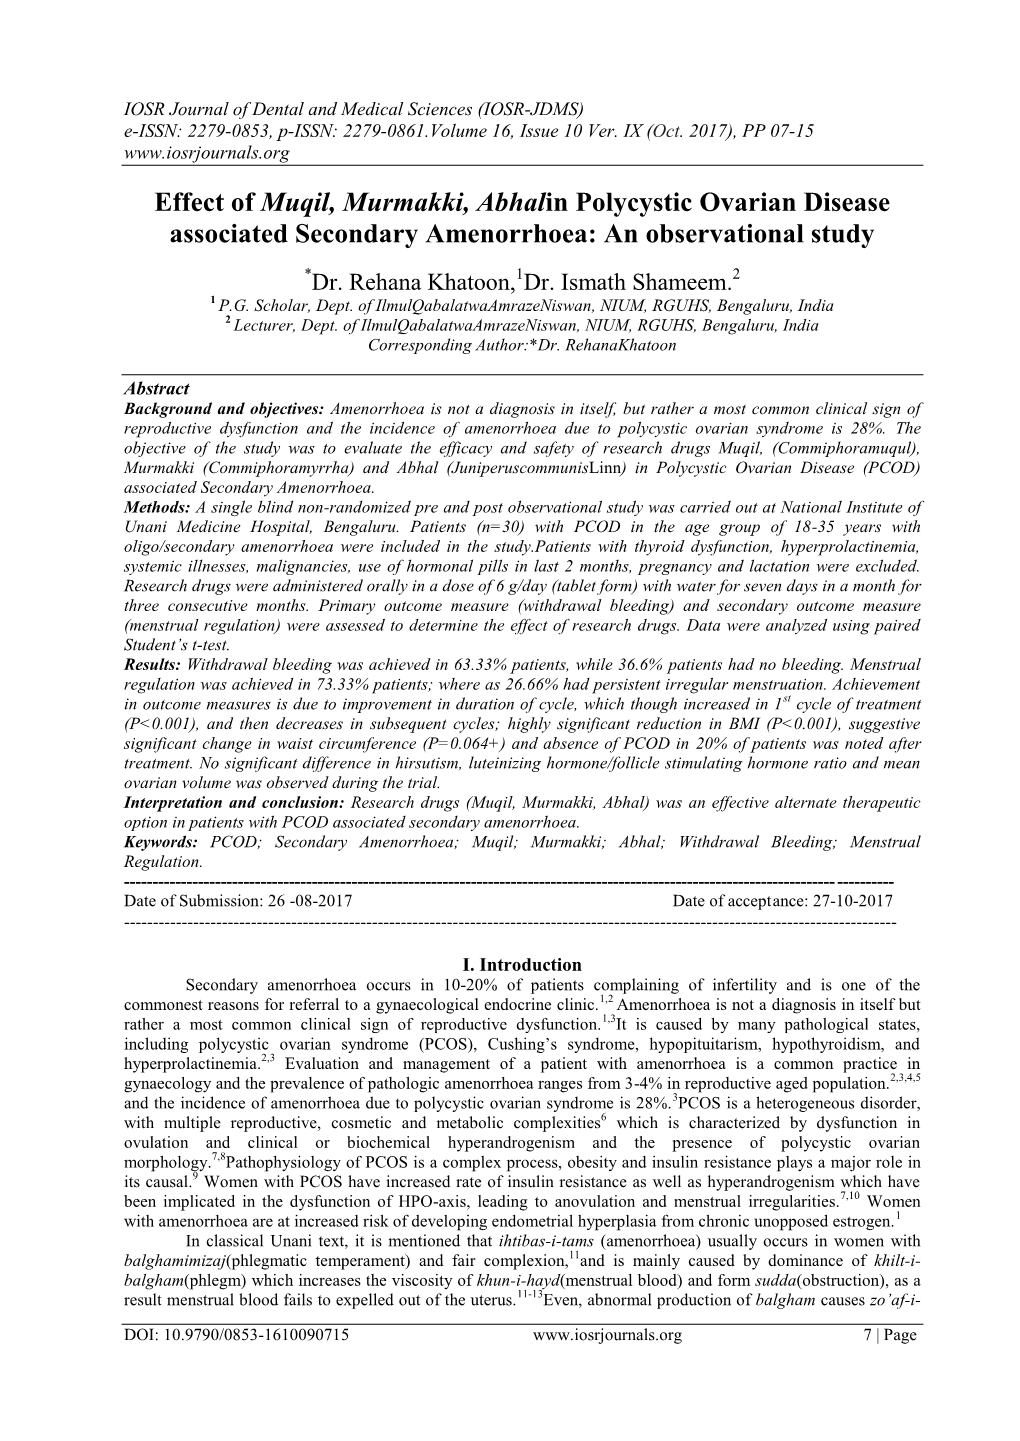 Effect of Muqil, Murmakki, Abhalin Polycystic Ovarian Disease Associated Secondary Amenorrhoea: an Observational Study